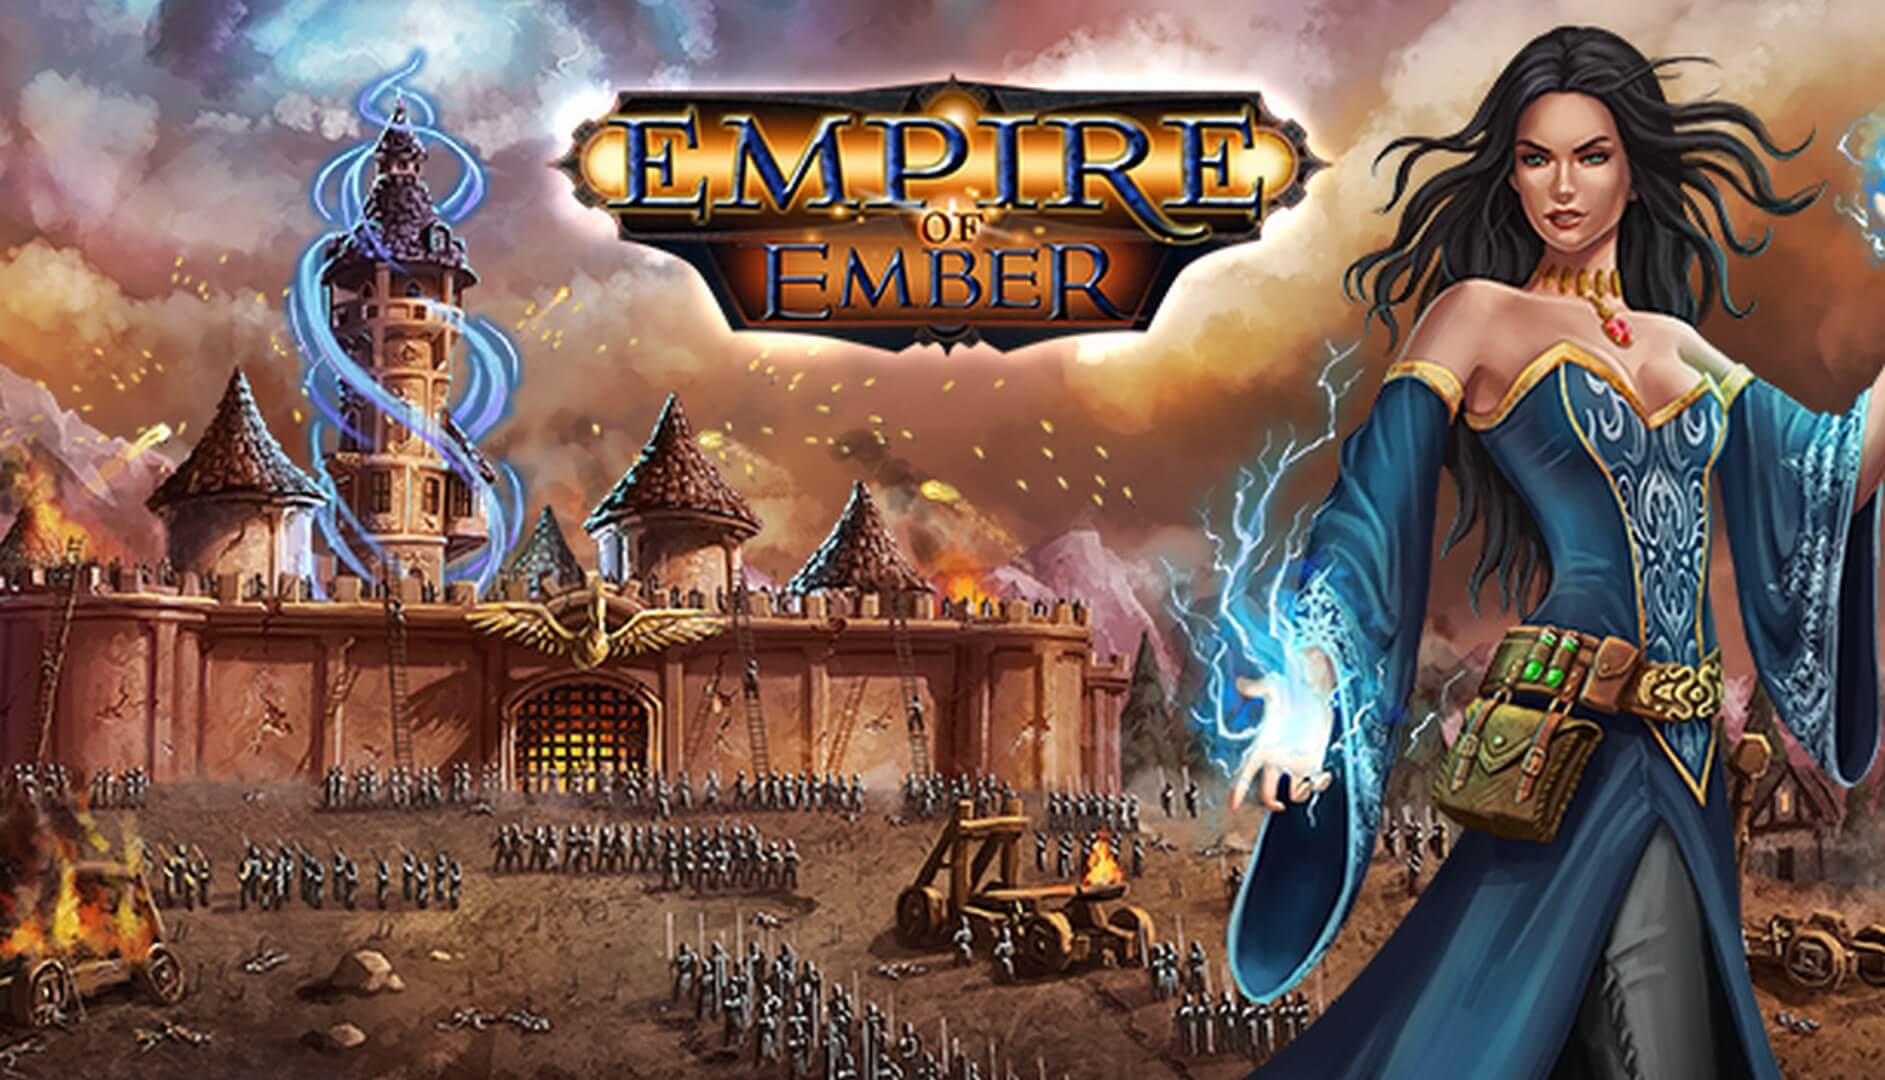 Empire of ember